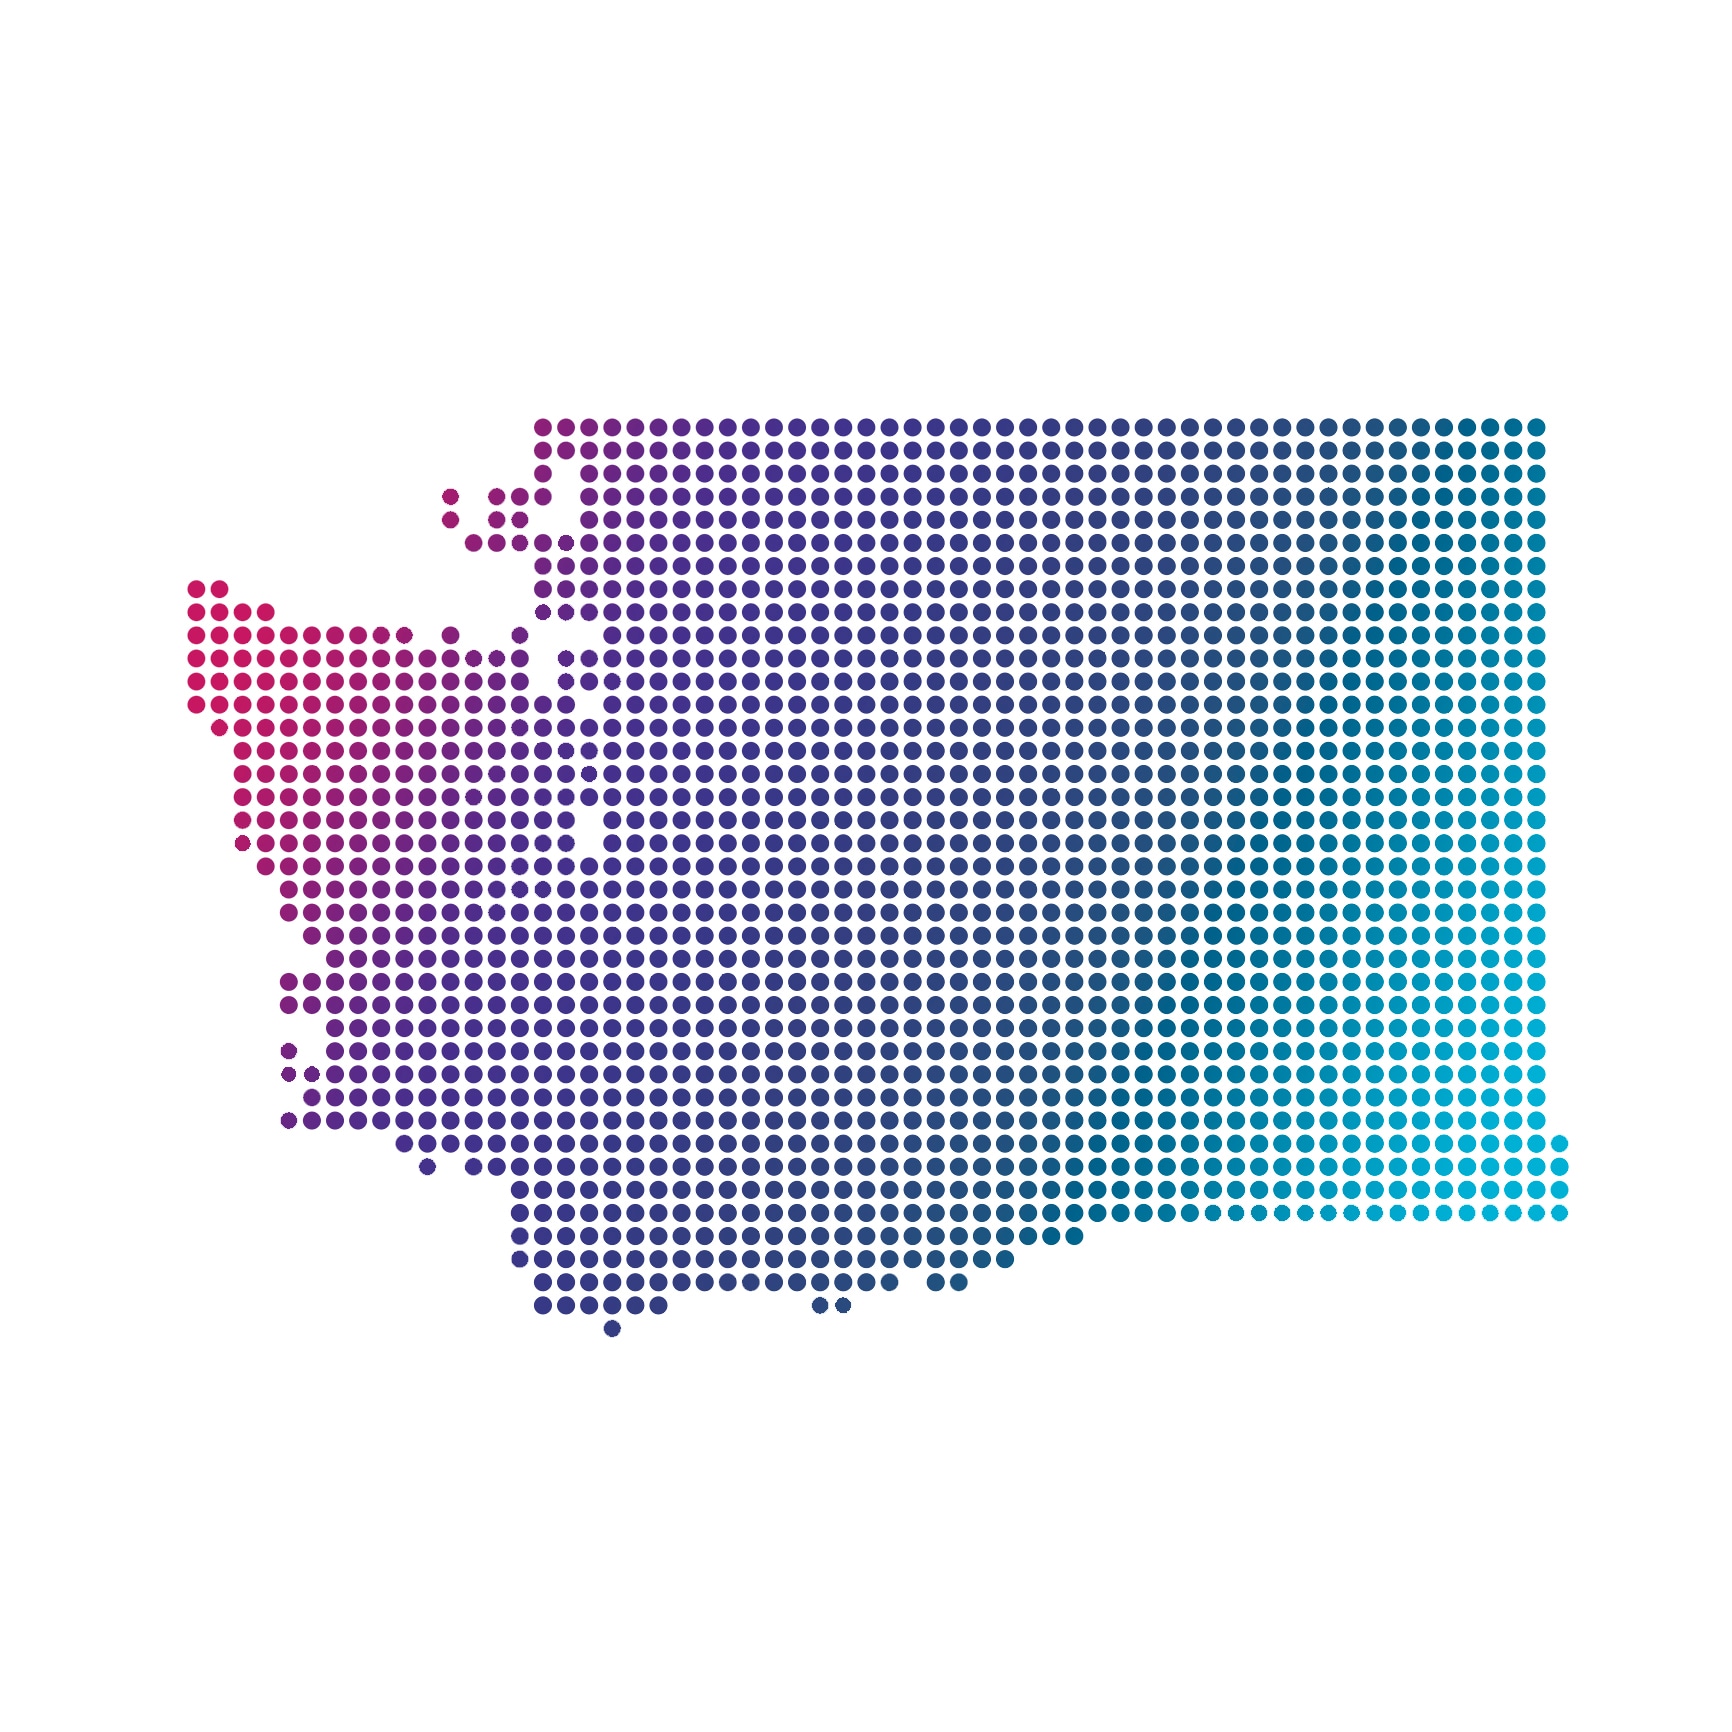 Washington map of colored dots on white background